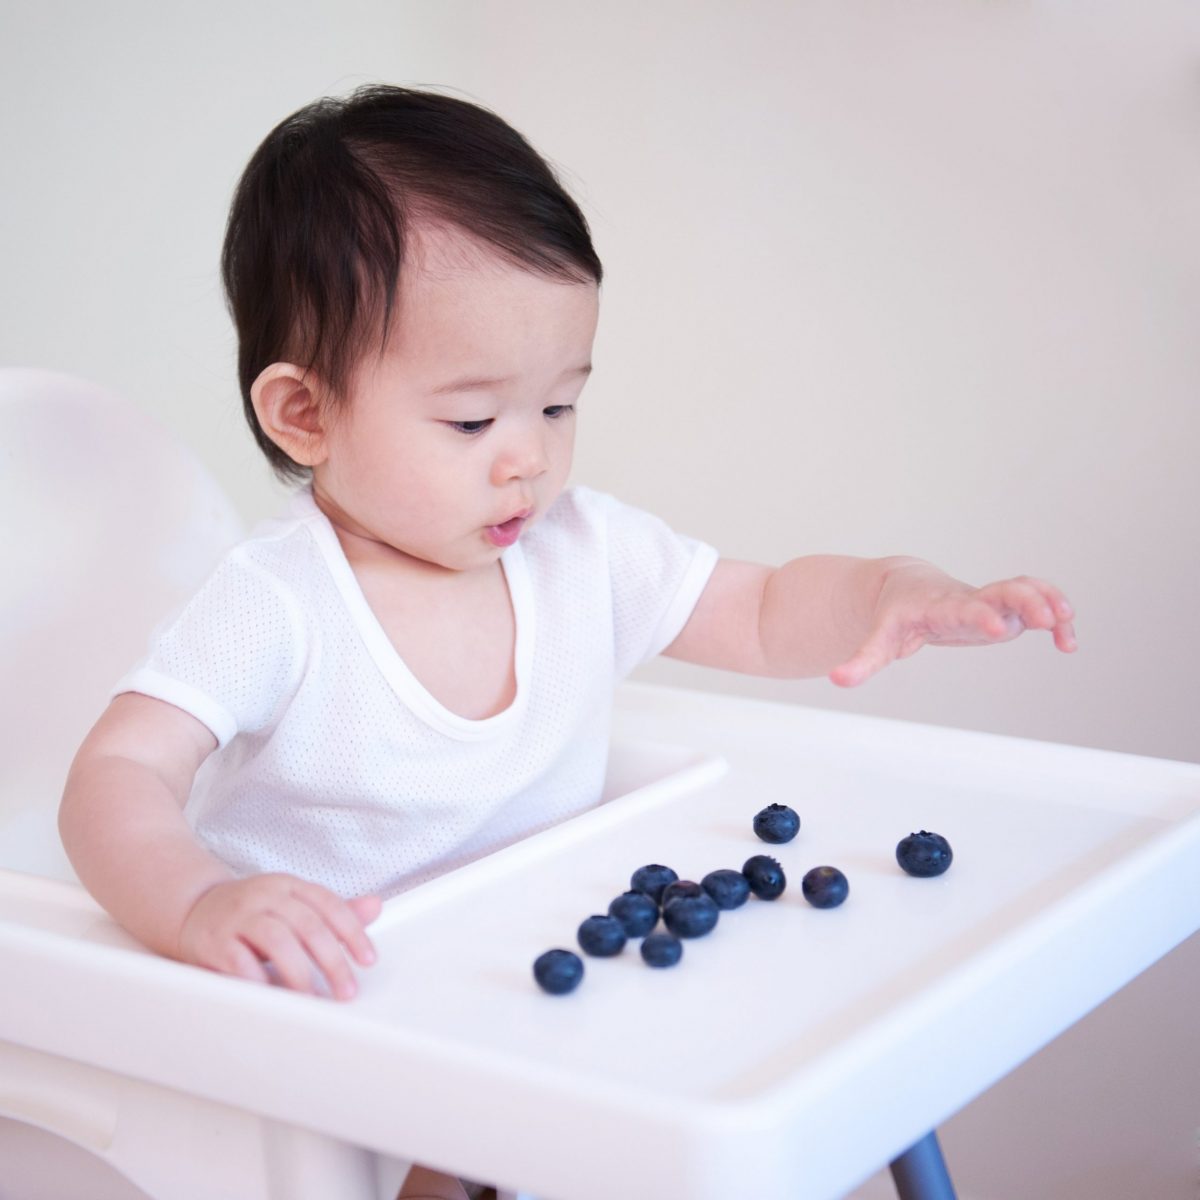 https://www.futurefoodsystems.com.au/wp-content/uploads/2021/10/Baby-eating-blueberries.-Credit-JoWen-Chao-Shutterstock_460990504_CROP-scaled-e1634891084401-1200x1200.jpg